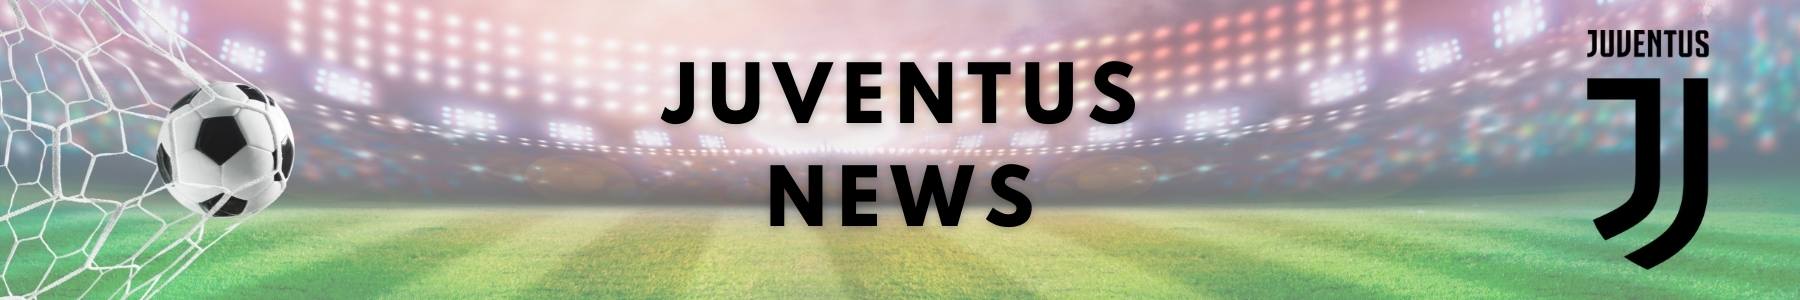 Juventus - Latest News